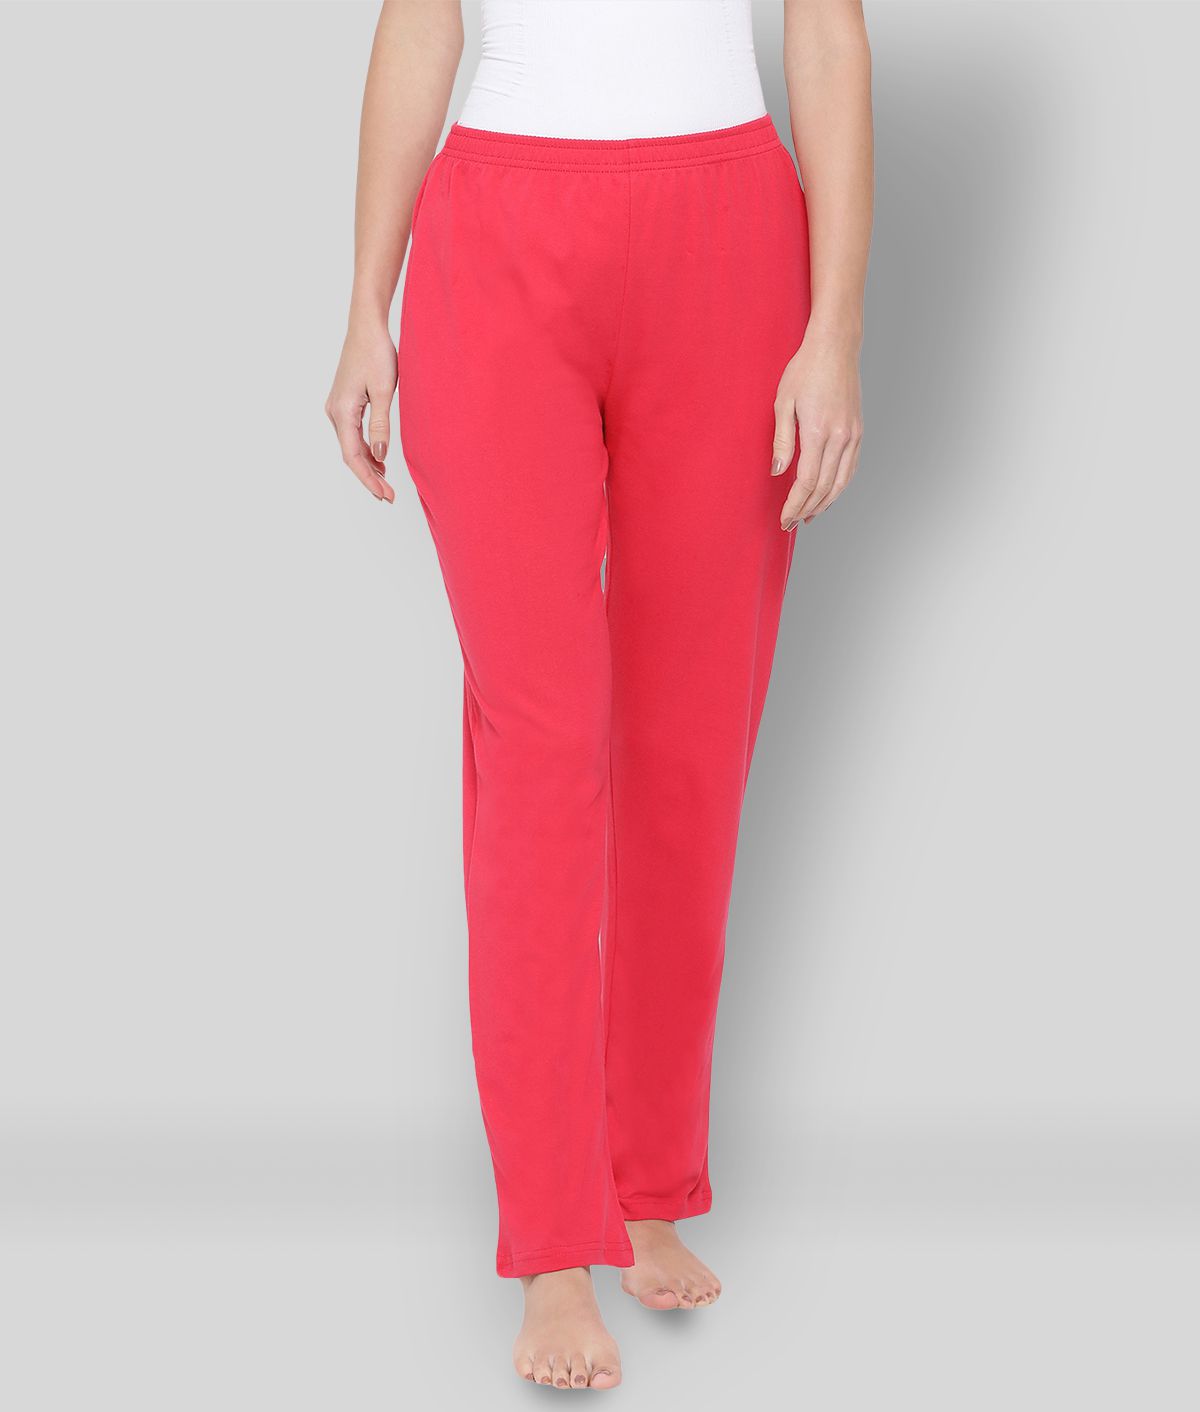     			Clovia - Pink Cotton Women's Nightwear Pyjama ( Pack of 1 )